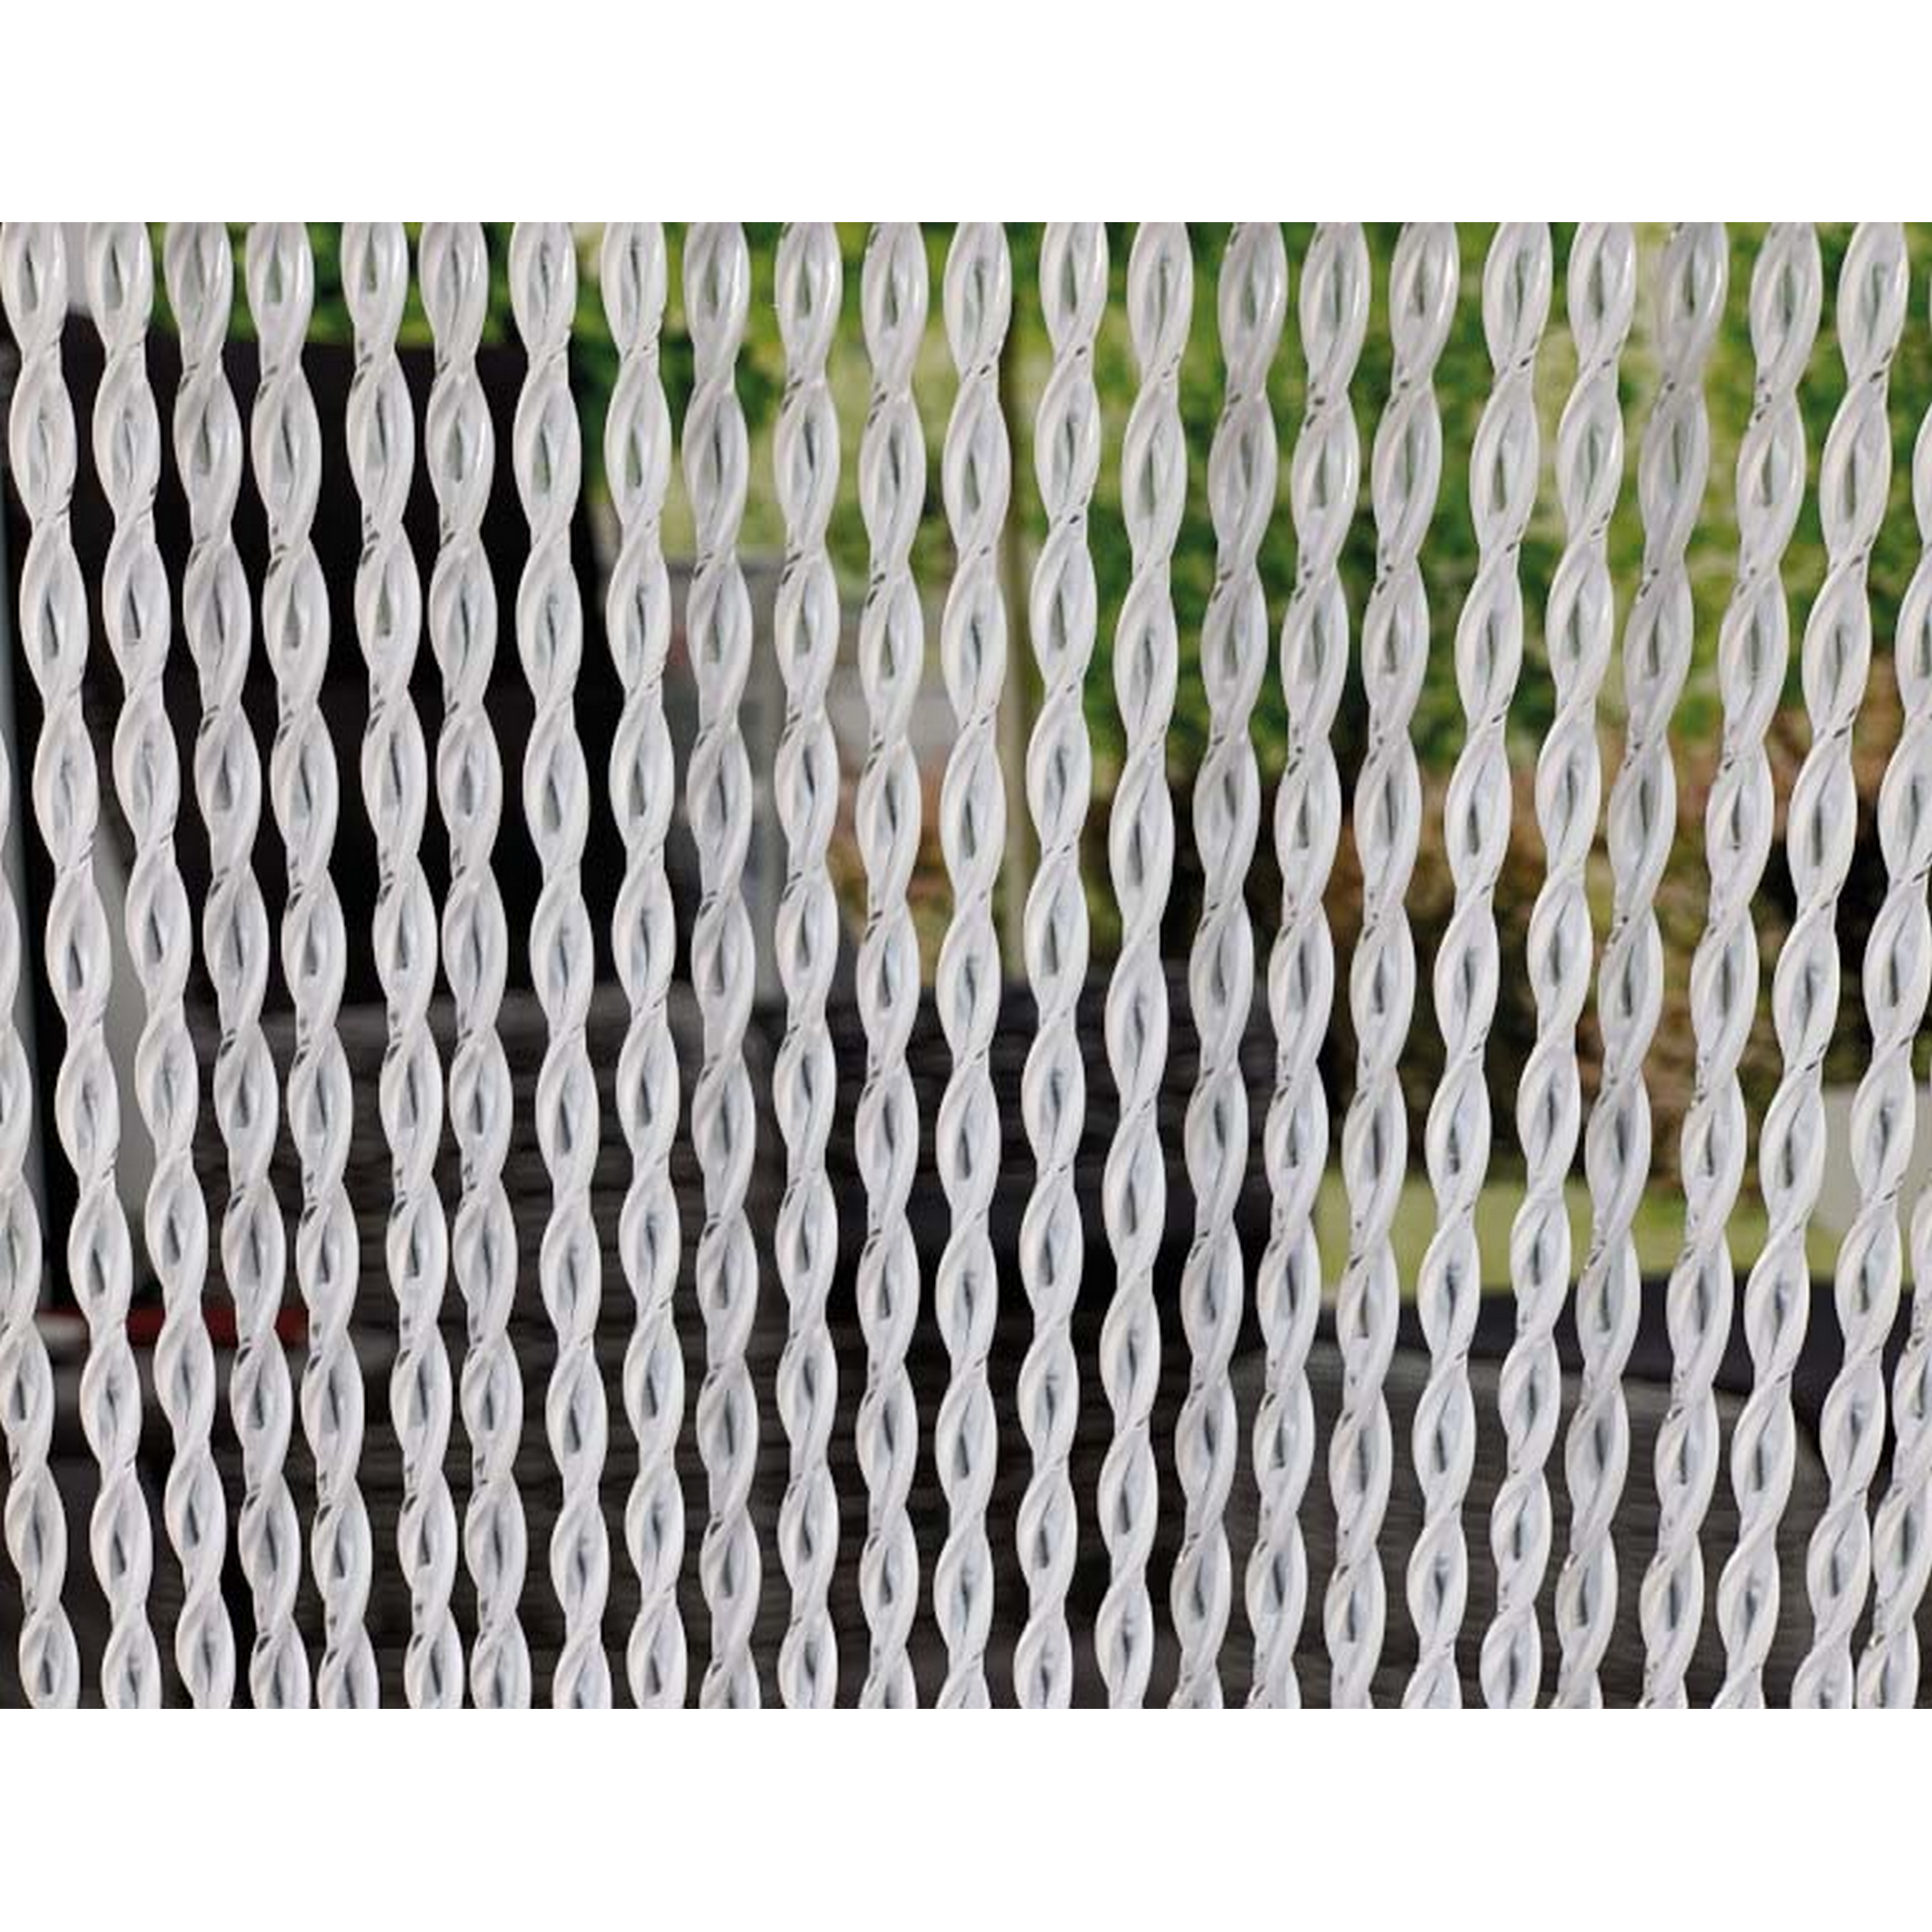 Türvorhang 'Piemonte' tarnsparent/weiß 90 x 210 cm + product picture